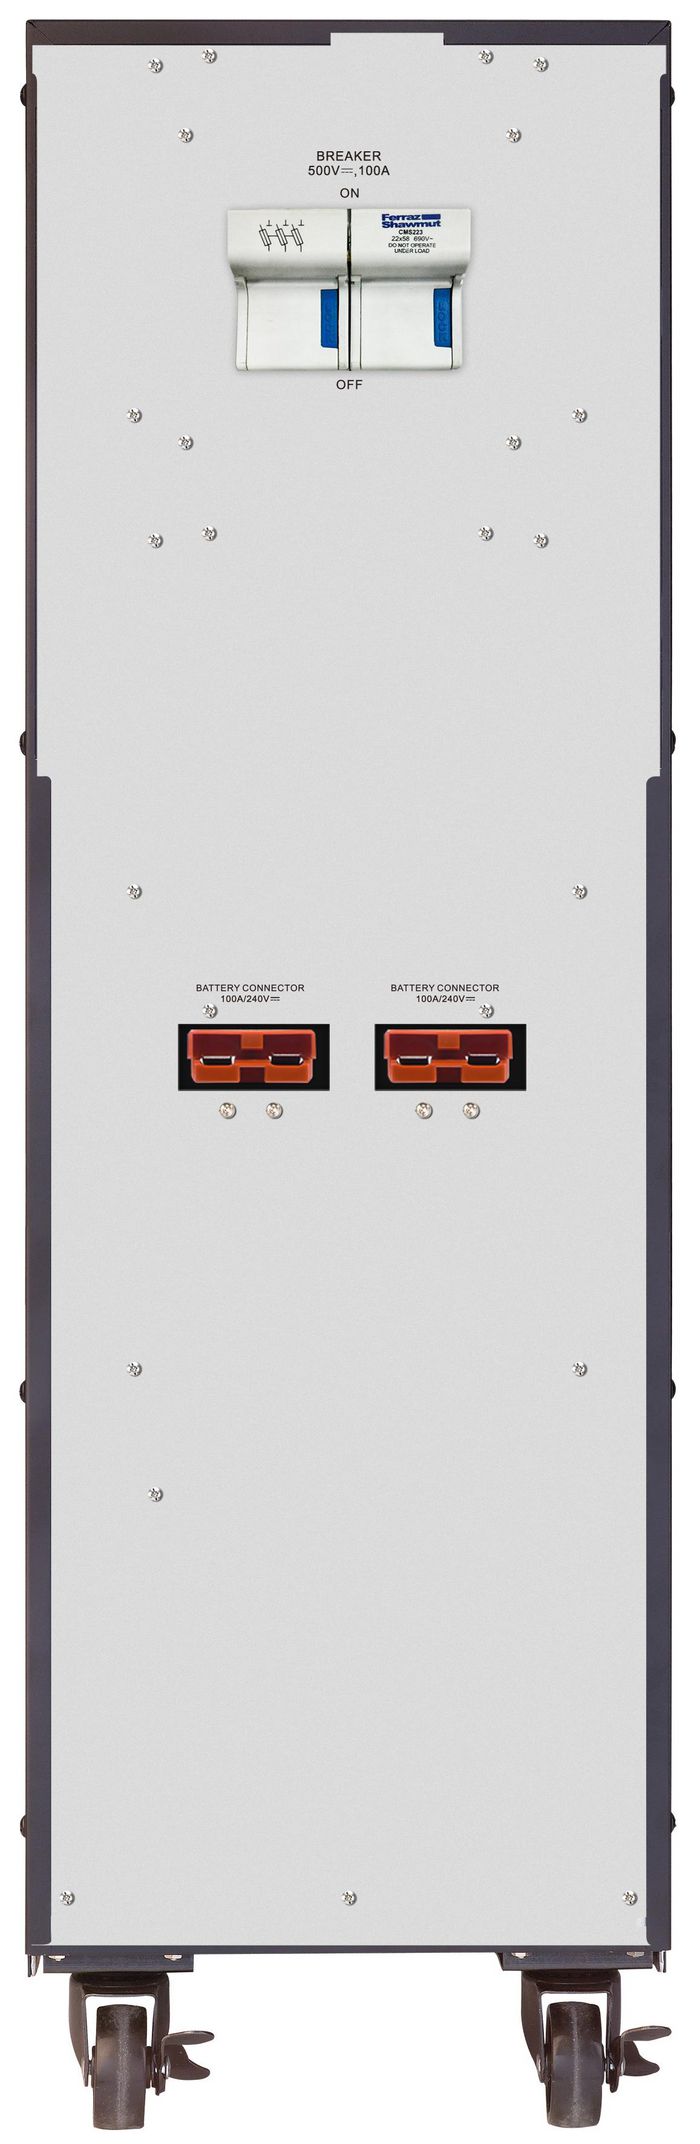 PowerWalker PowerWalker BP A240TB-80x9Ah for VFI CP 3/3 - W124596946